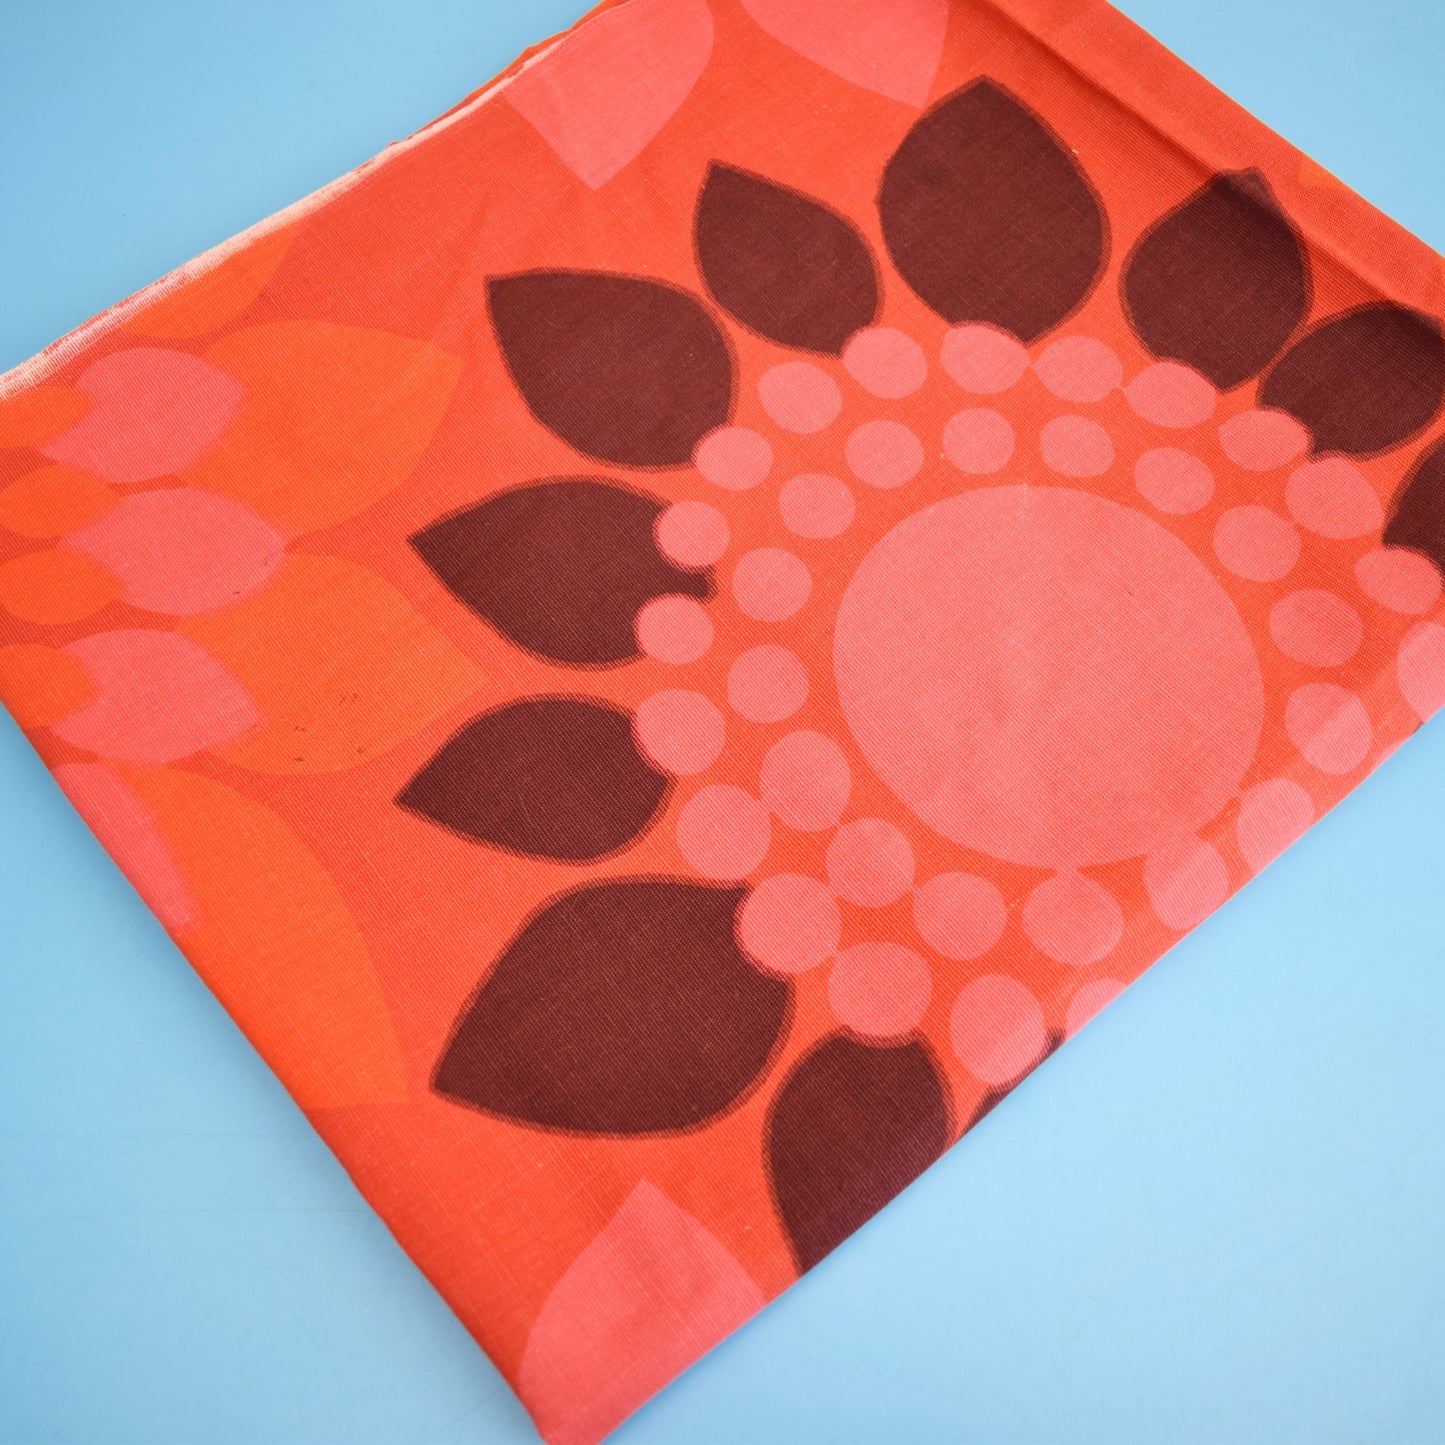 Vintage 1960s Boras Swedish Fabric / Tablecloth